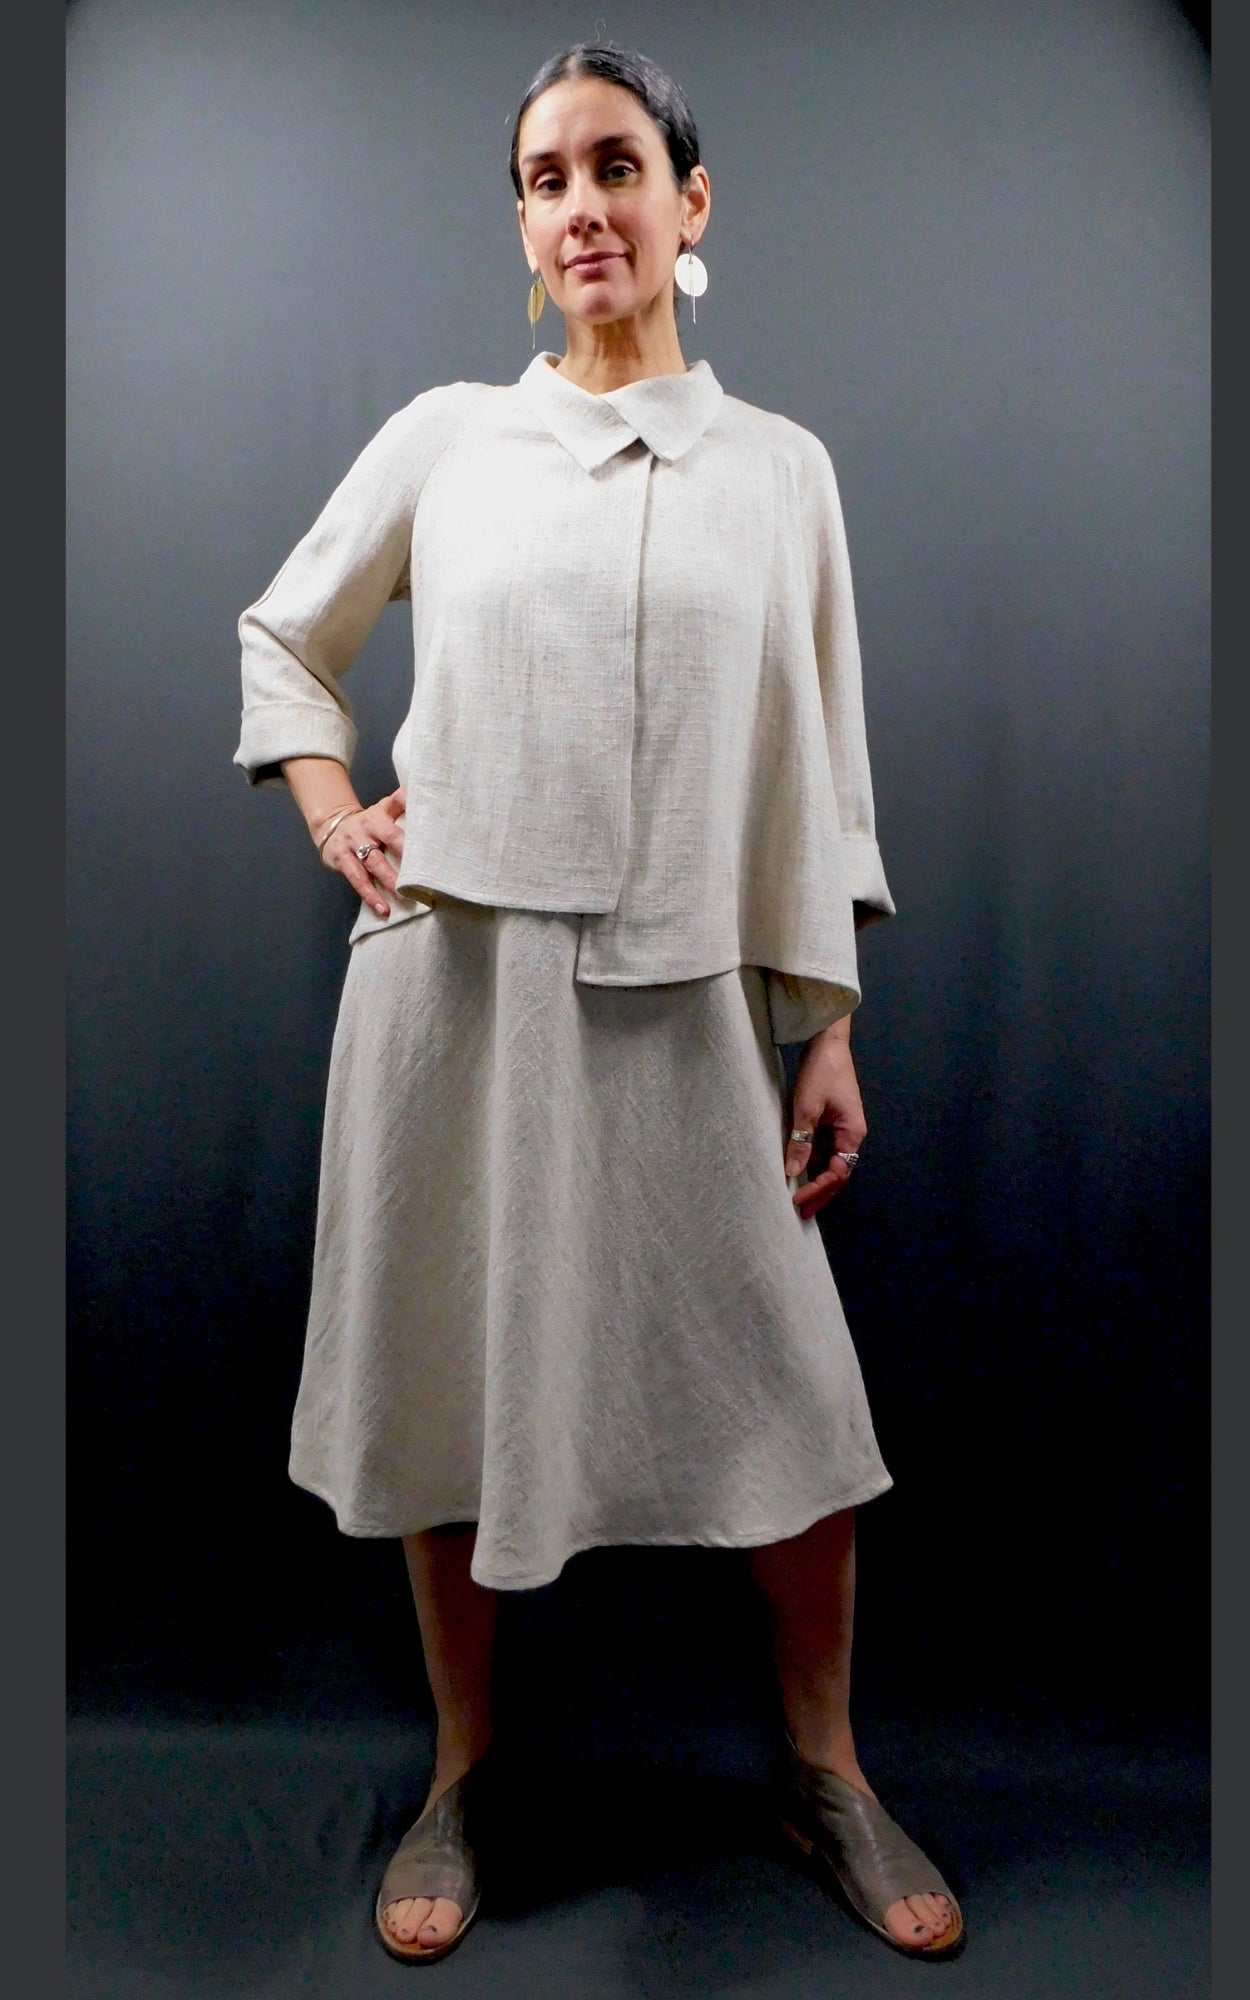 Linen Viscose Raglan Sleeve Jacket with Asymmetric Front Bodice Hem, worn over matching sleeveless dress  - Oatmeal